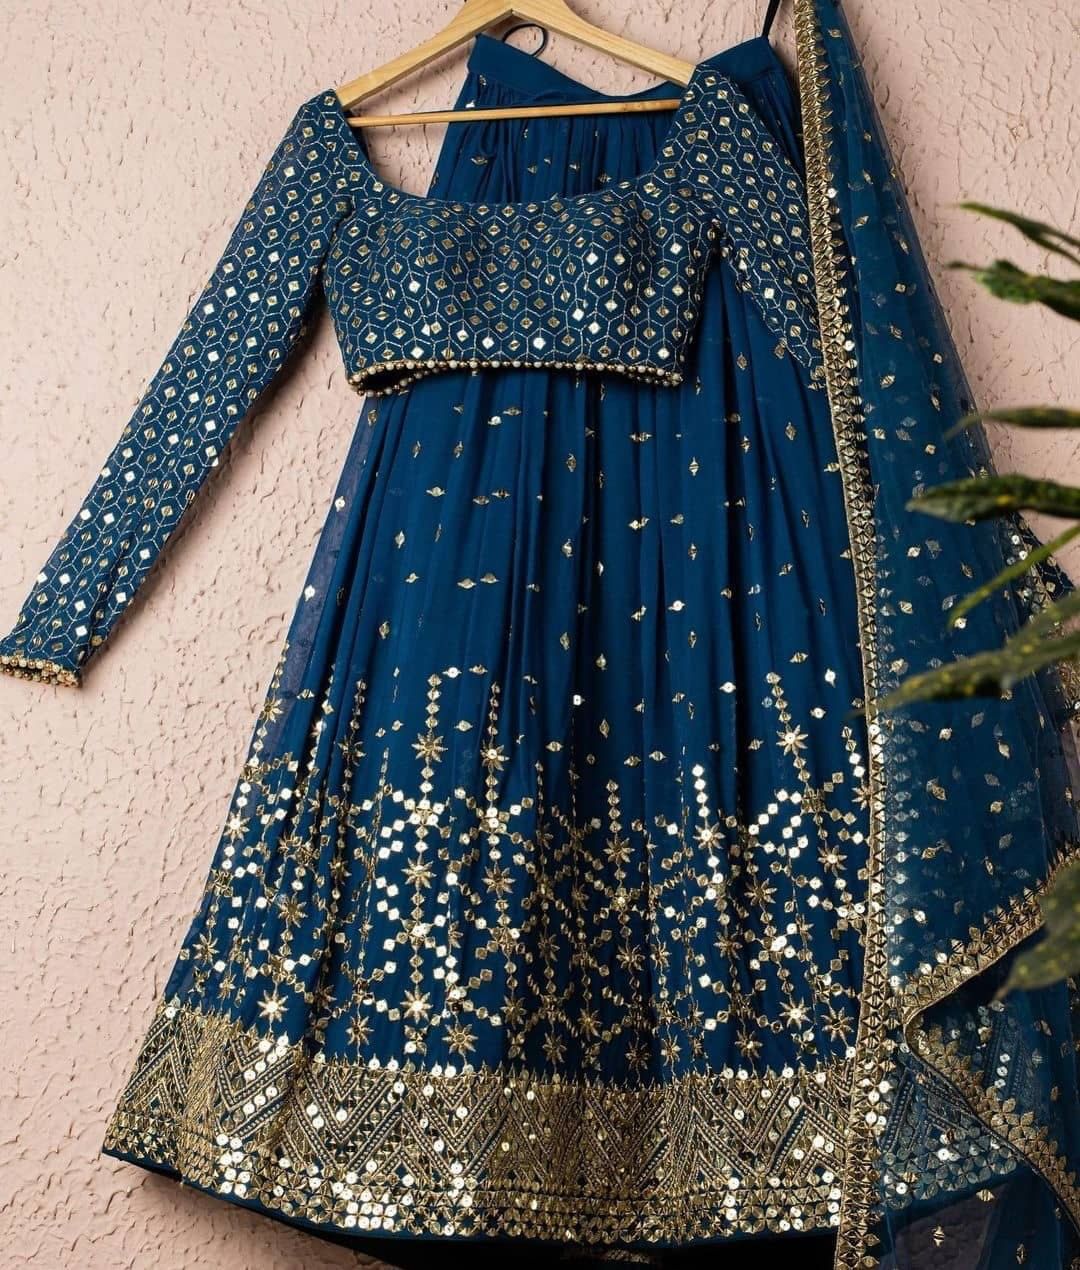 Wedding special blue color lehenga choli for stylish looks